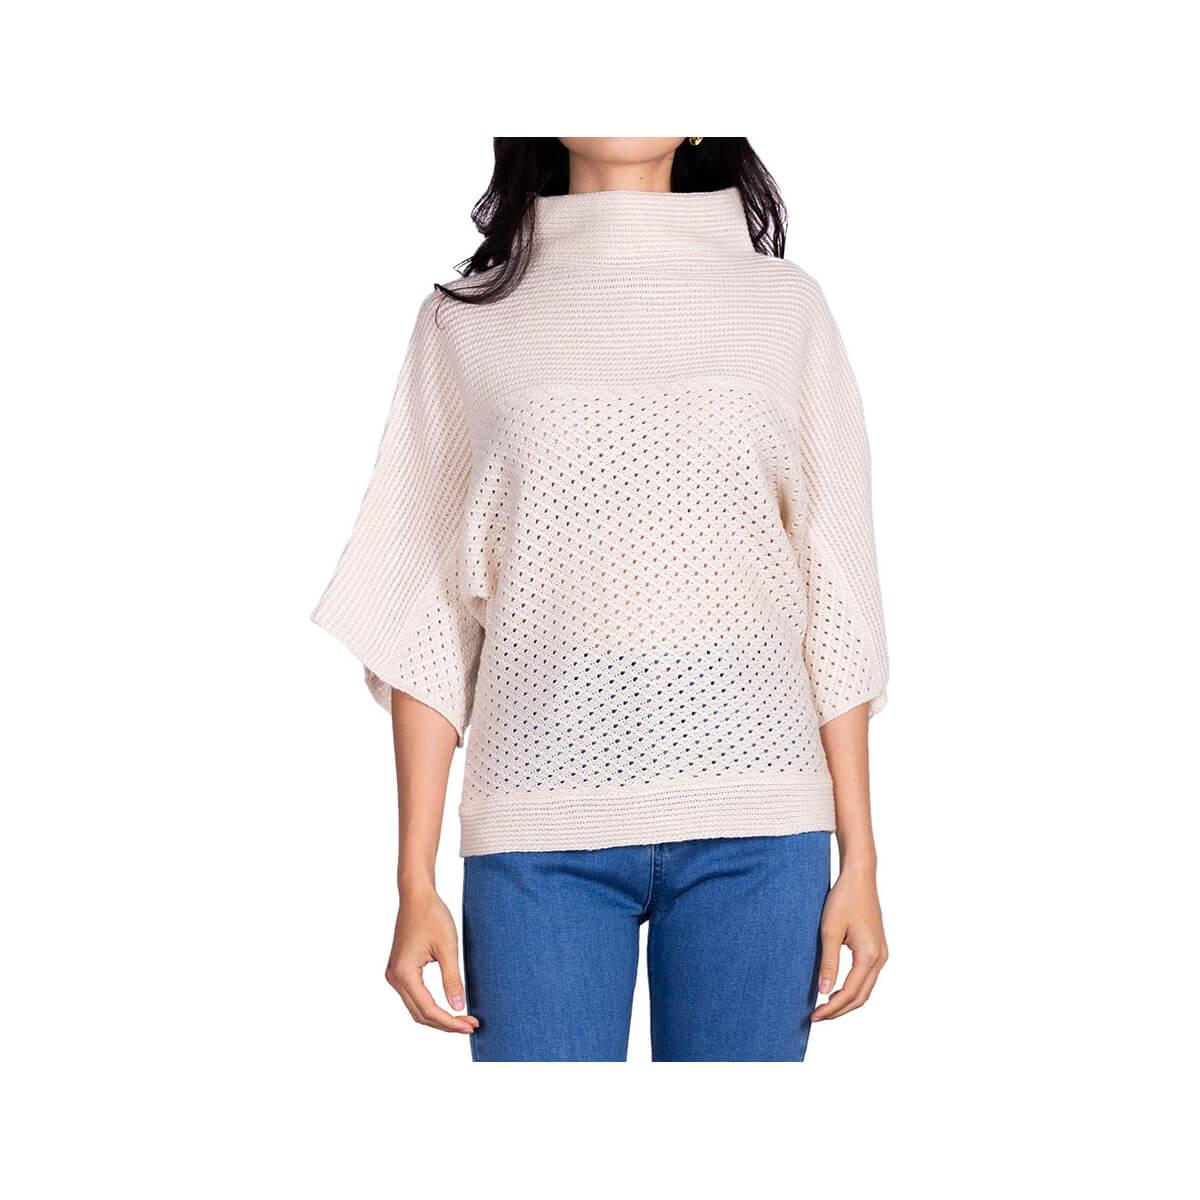  Women's Cowl Neck Half Sleeve Sweater